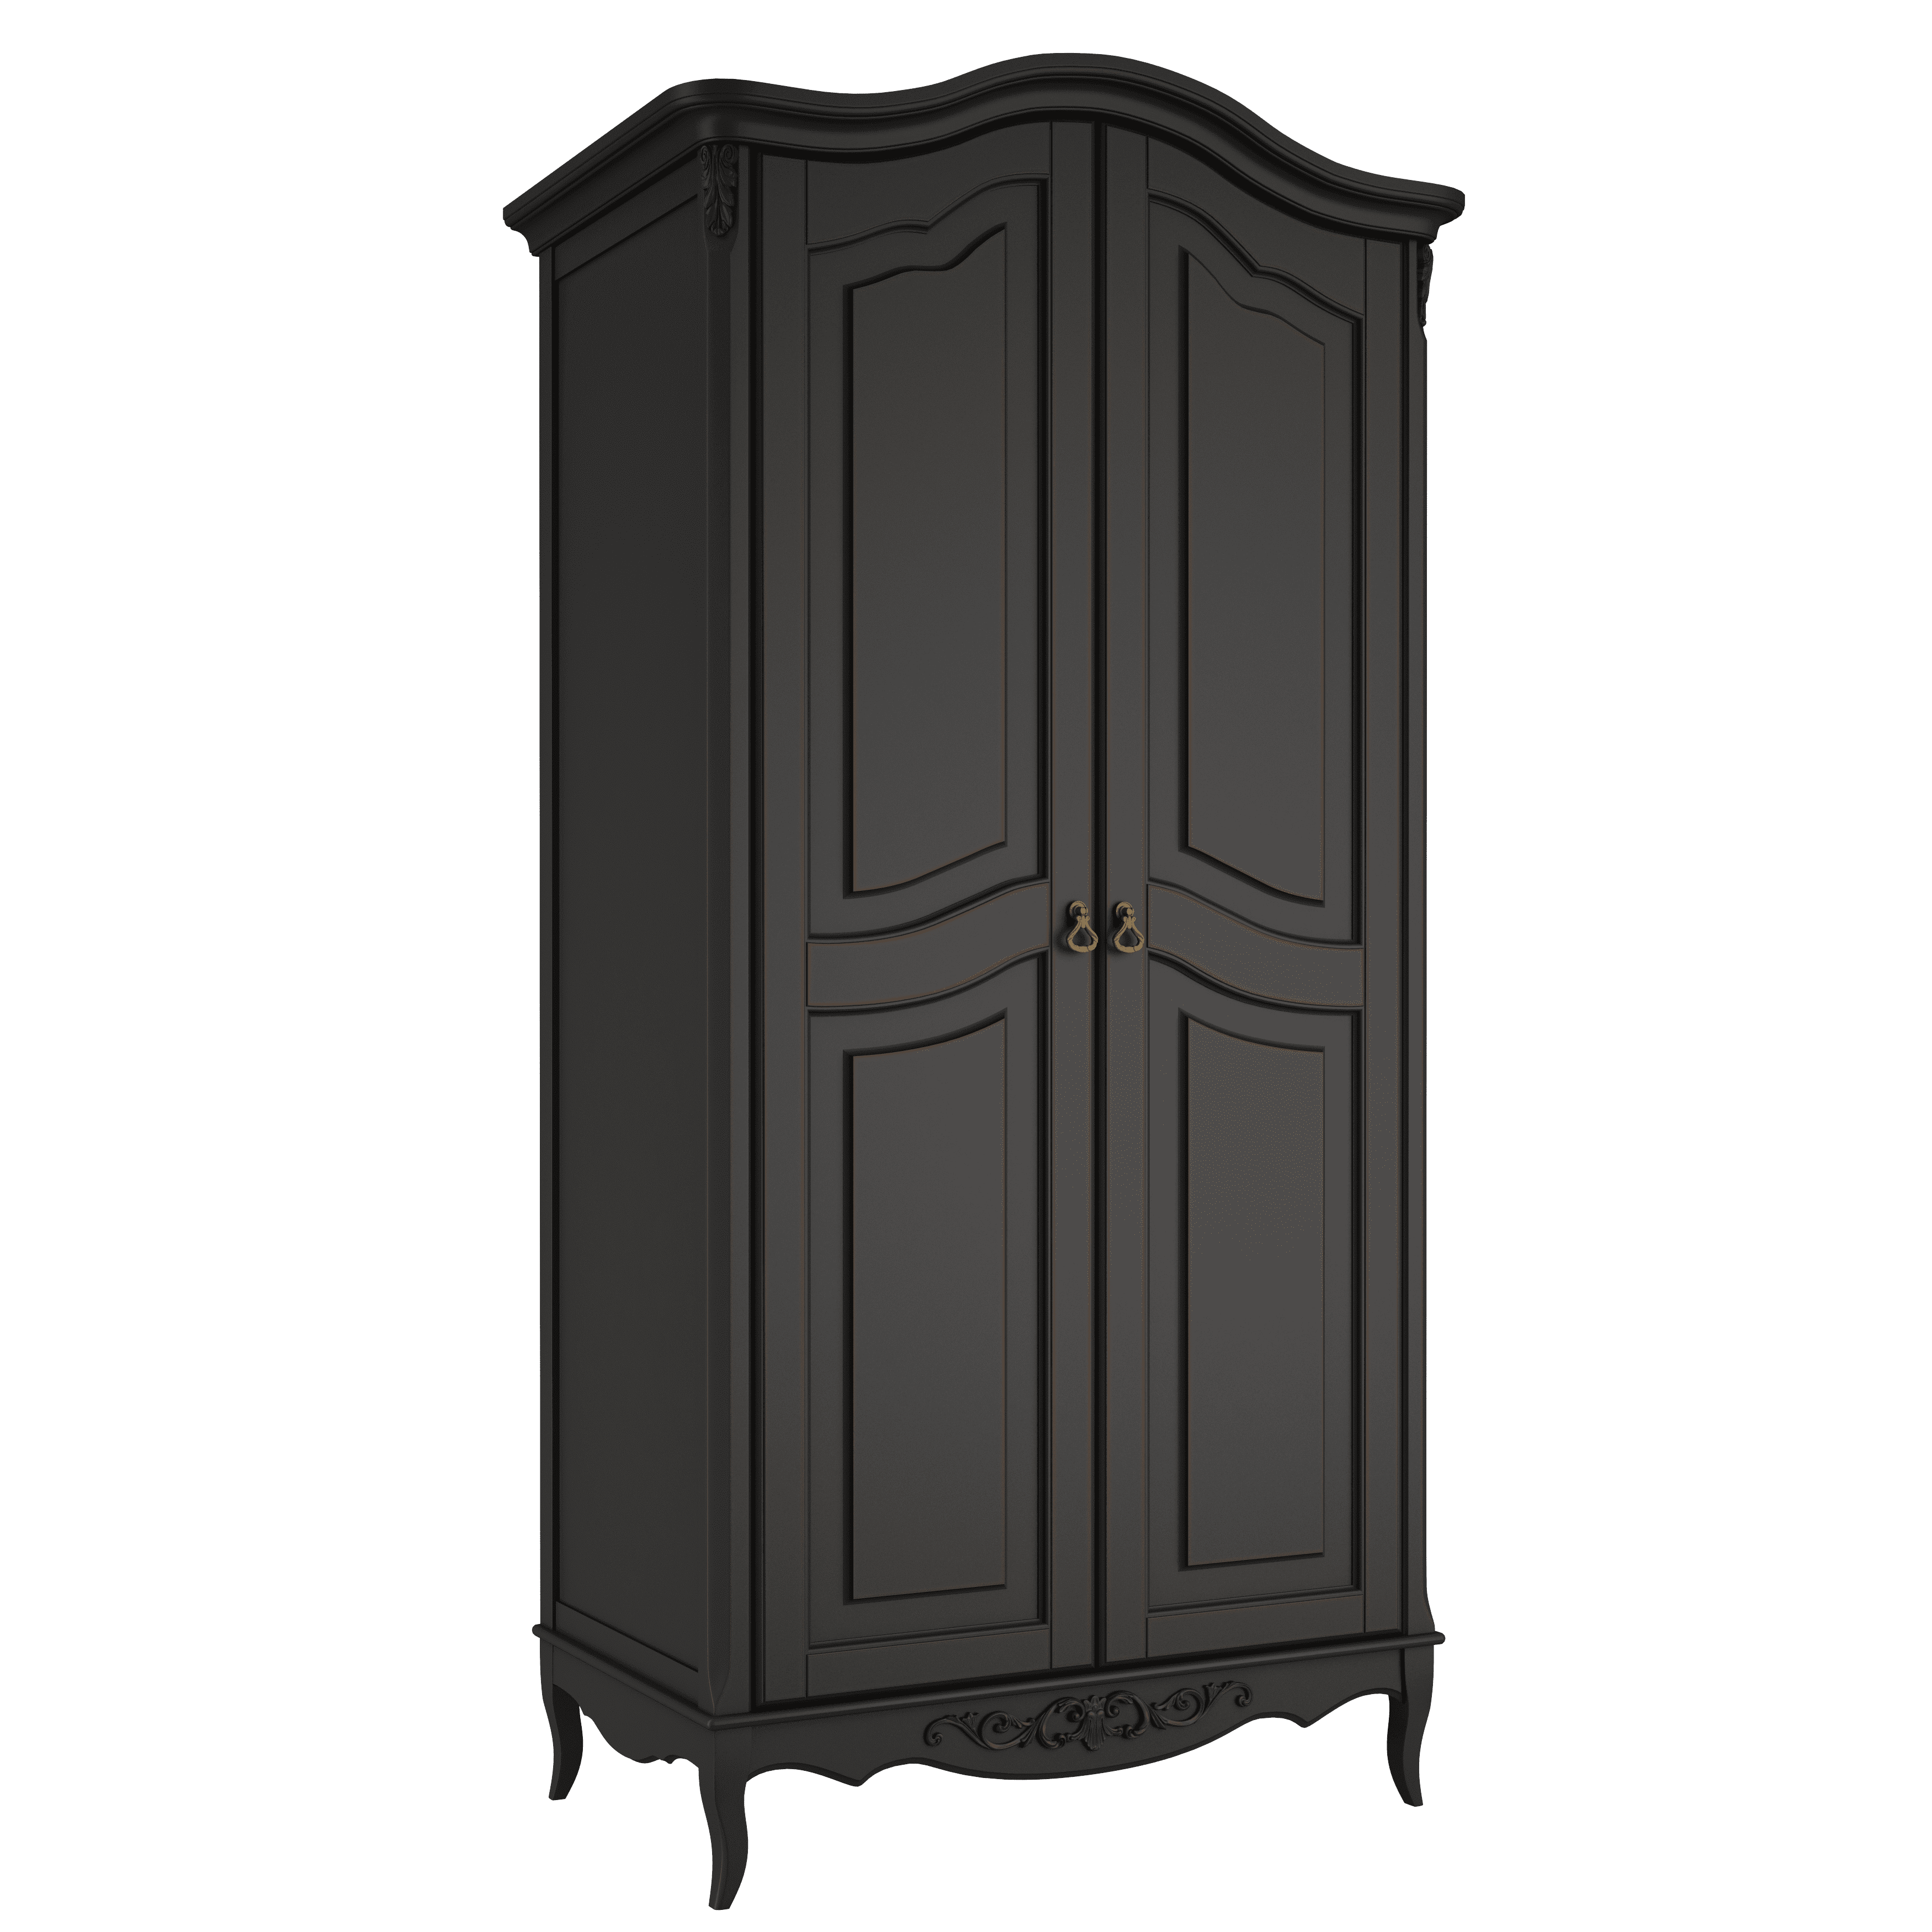 Шкаф платяной Aletan Provence, 2-х дверный, цвет: черный (B802BL)B802BL